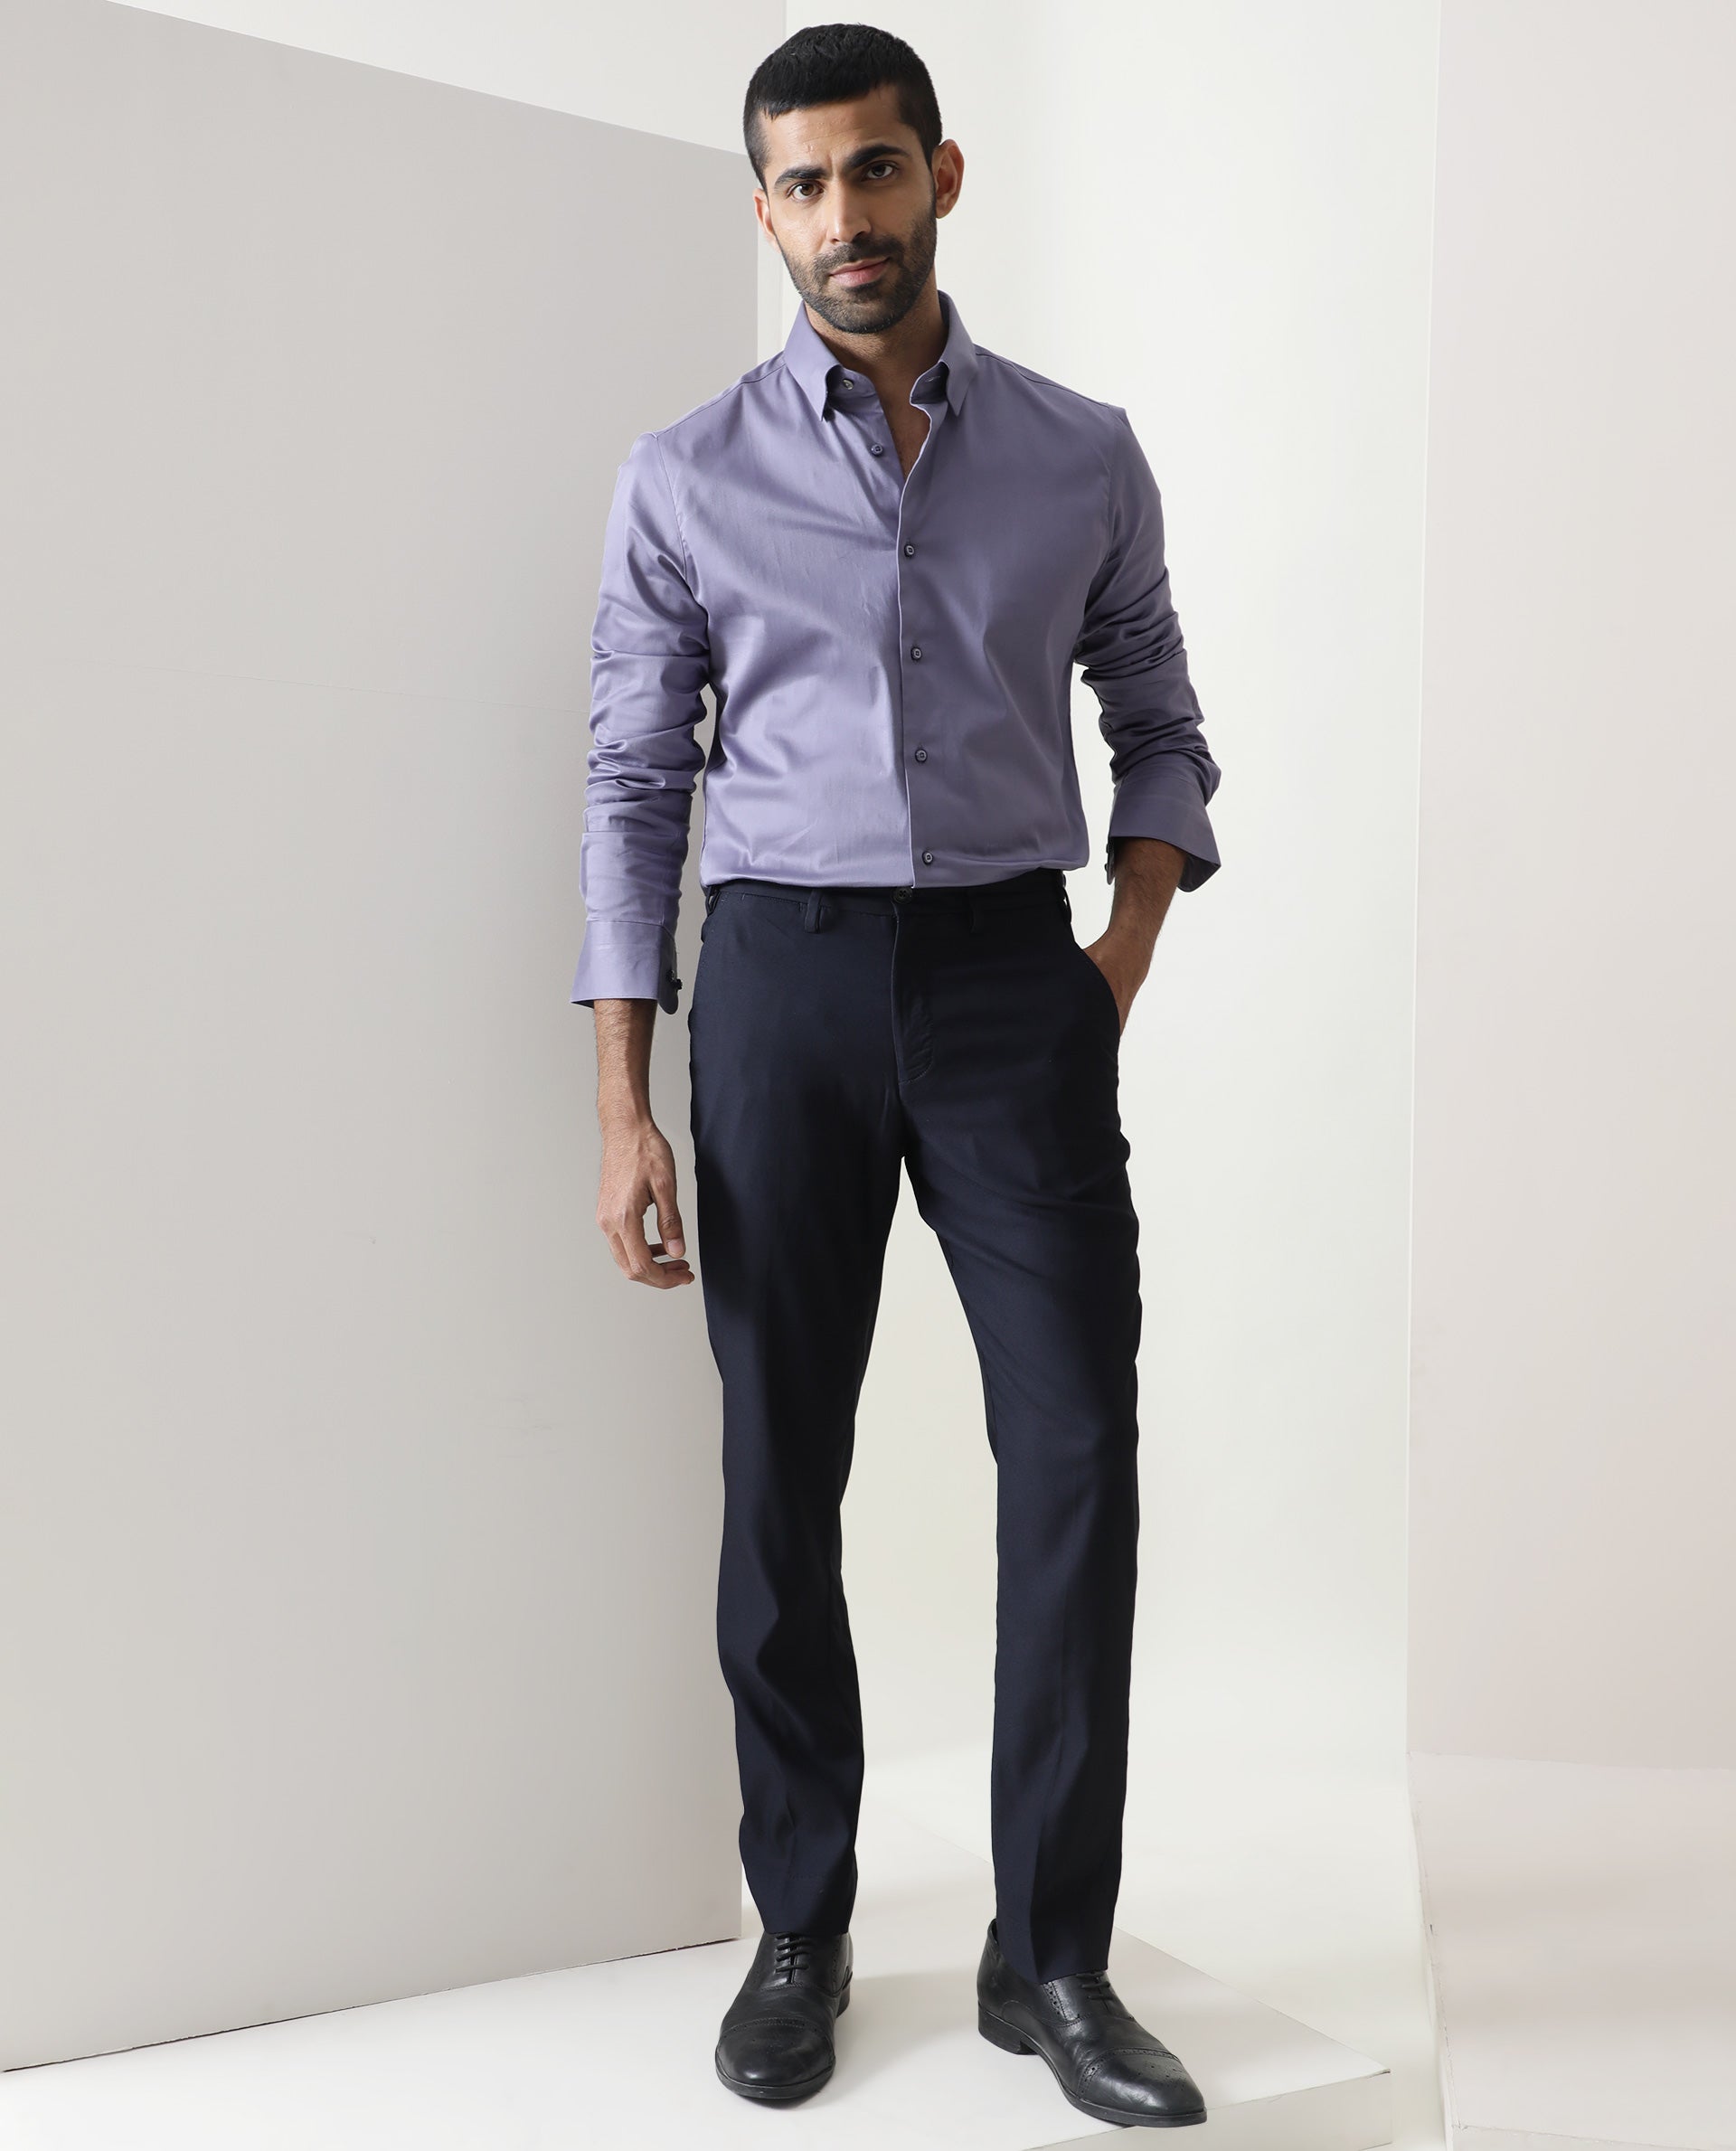 Magenta shirt and grey trouser | Grey trousers, Shirt drawing, Pantsuit